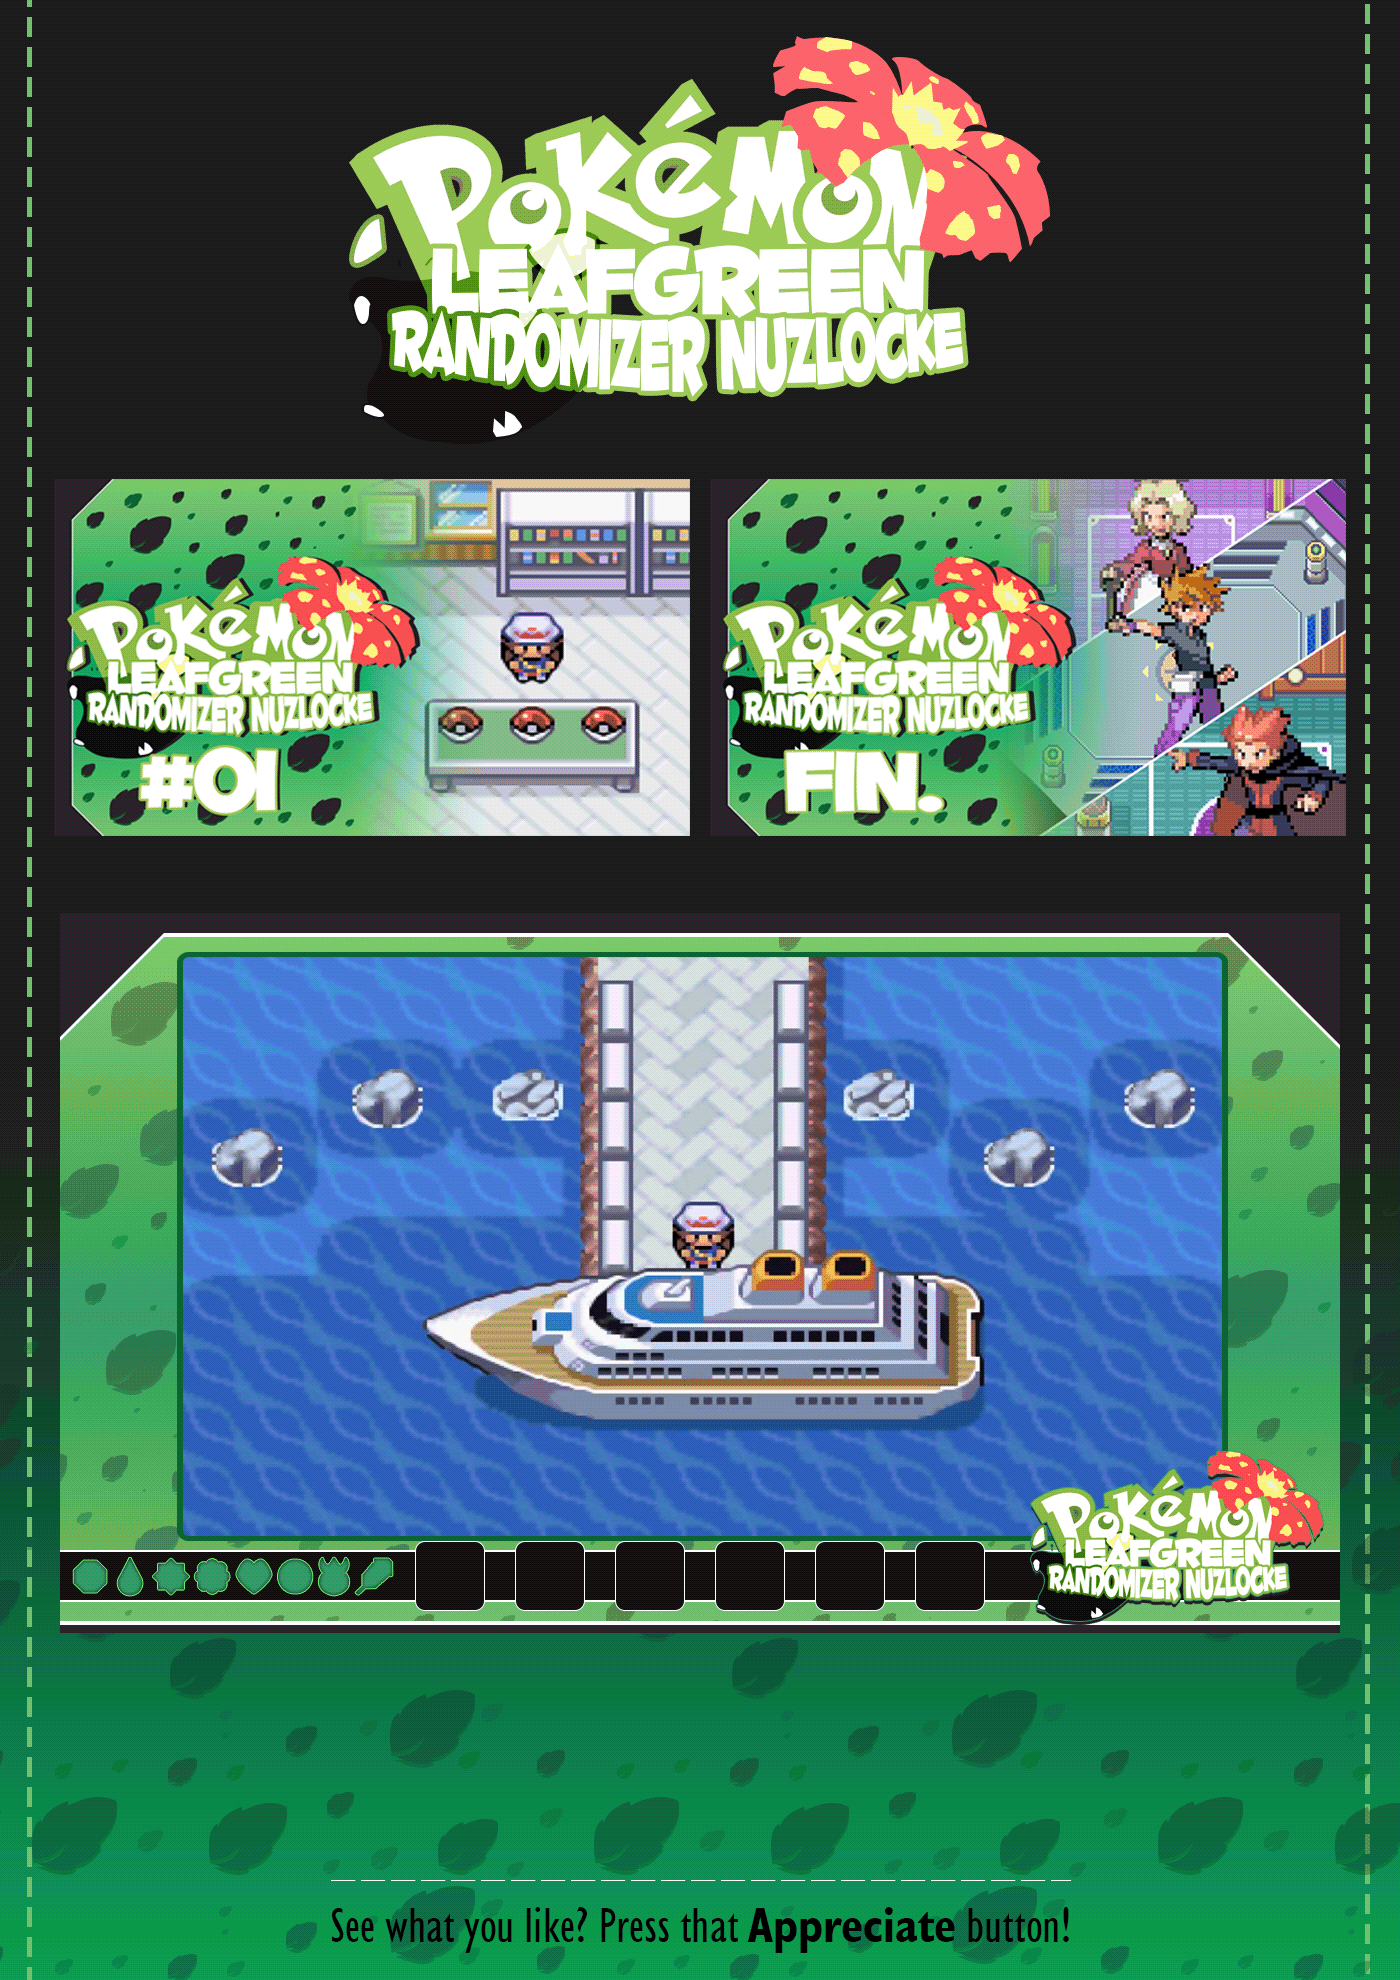 Pokémon LeafGreen Randomizer Nuzlocke Series Package